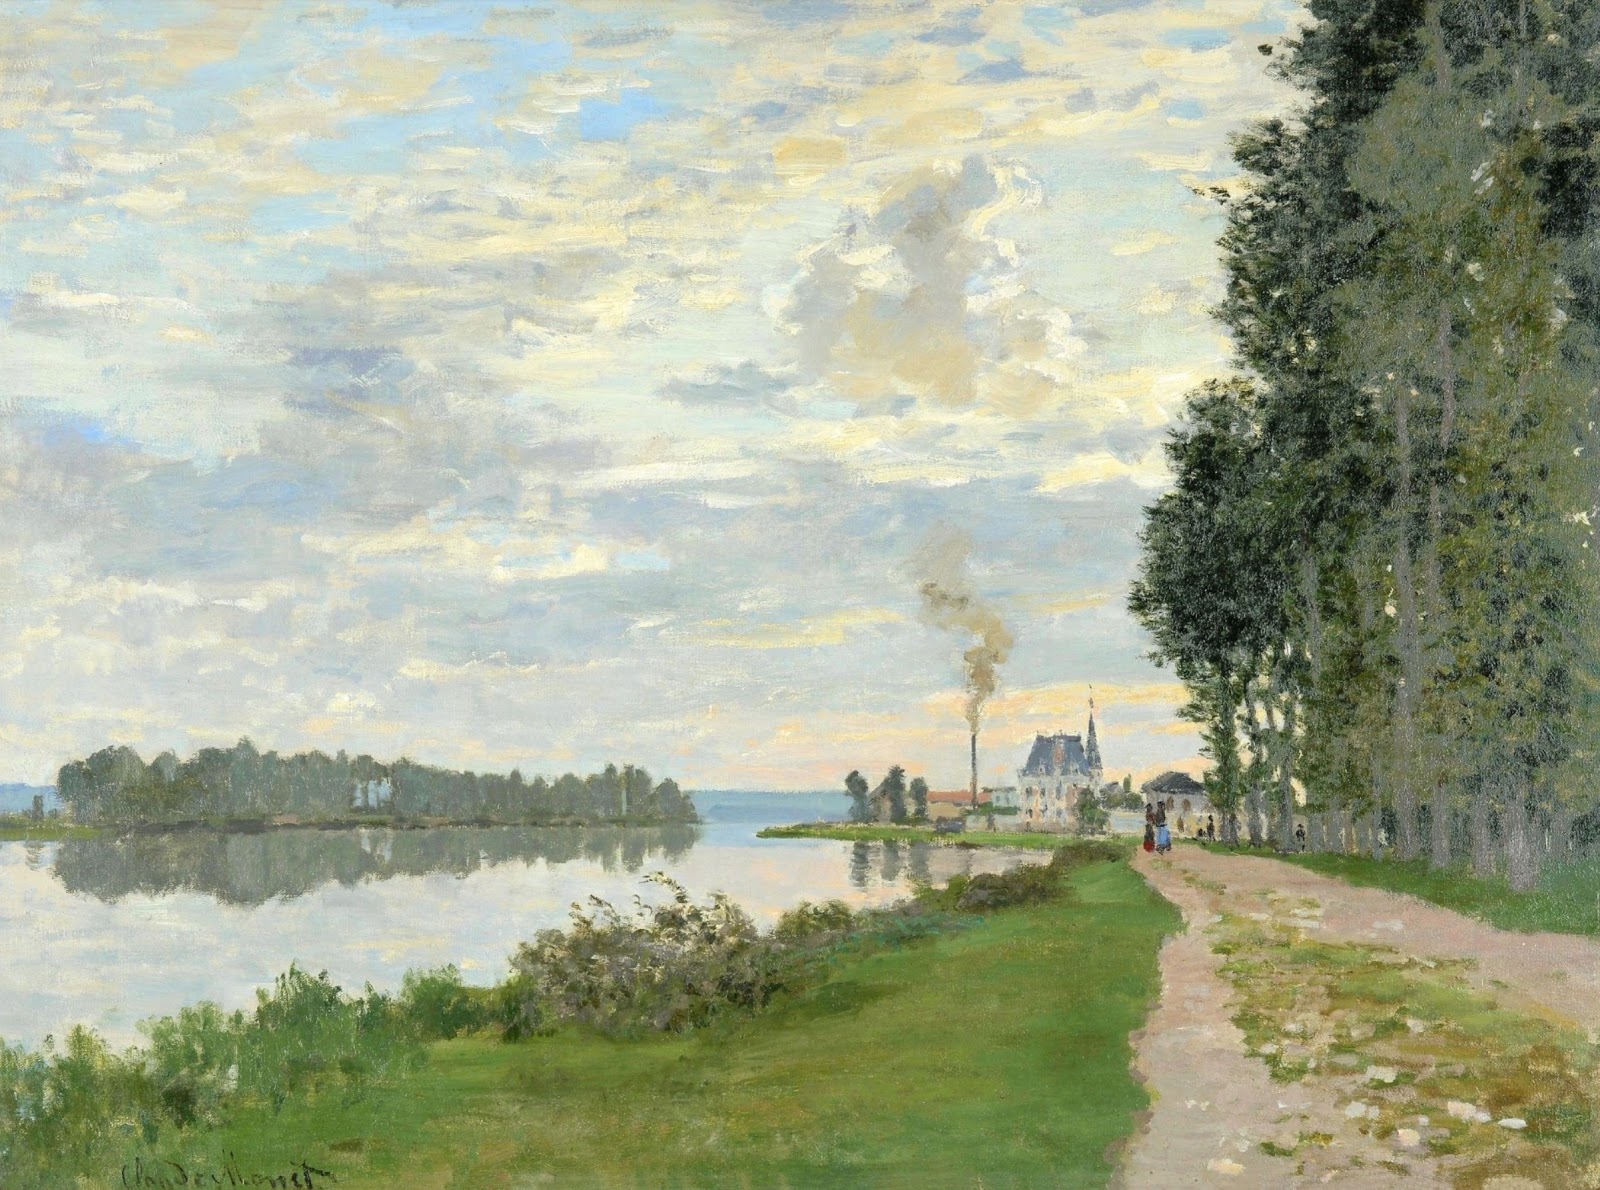 Claude+Monet-1840-1926 (379).jpg